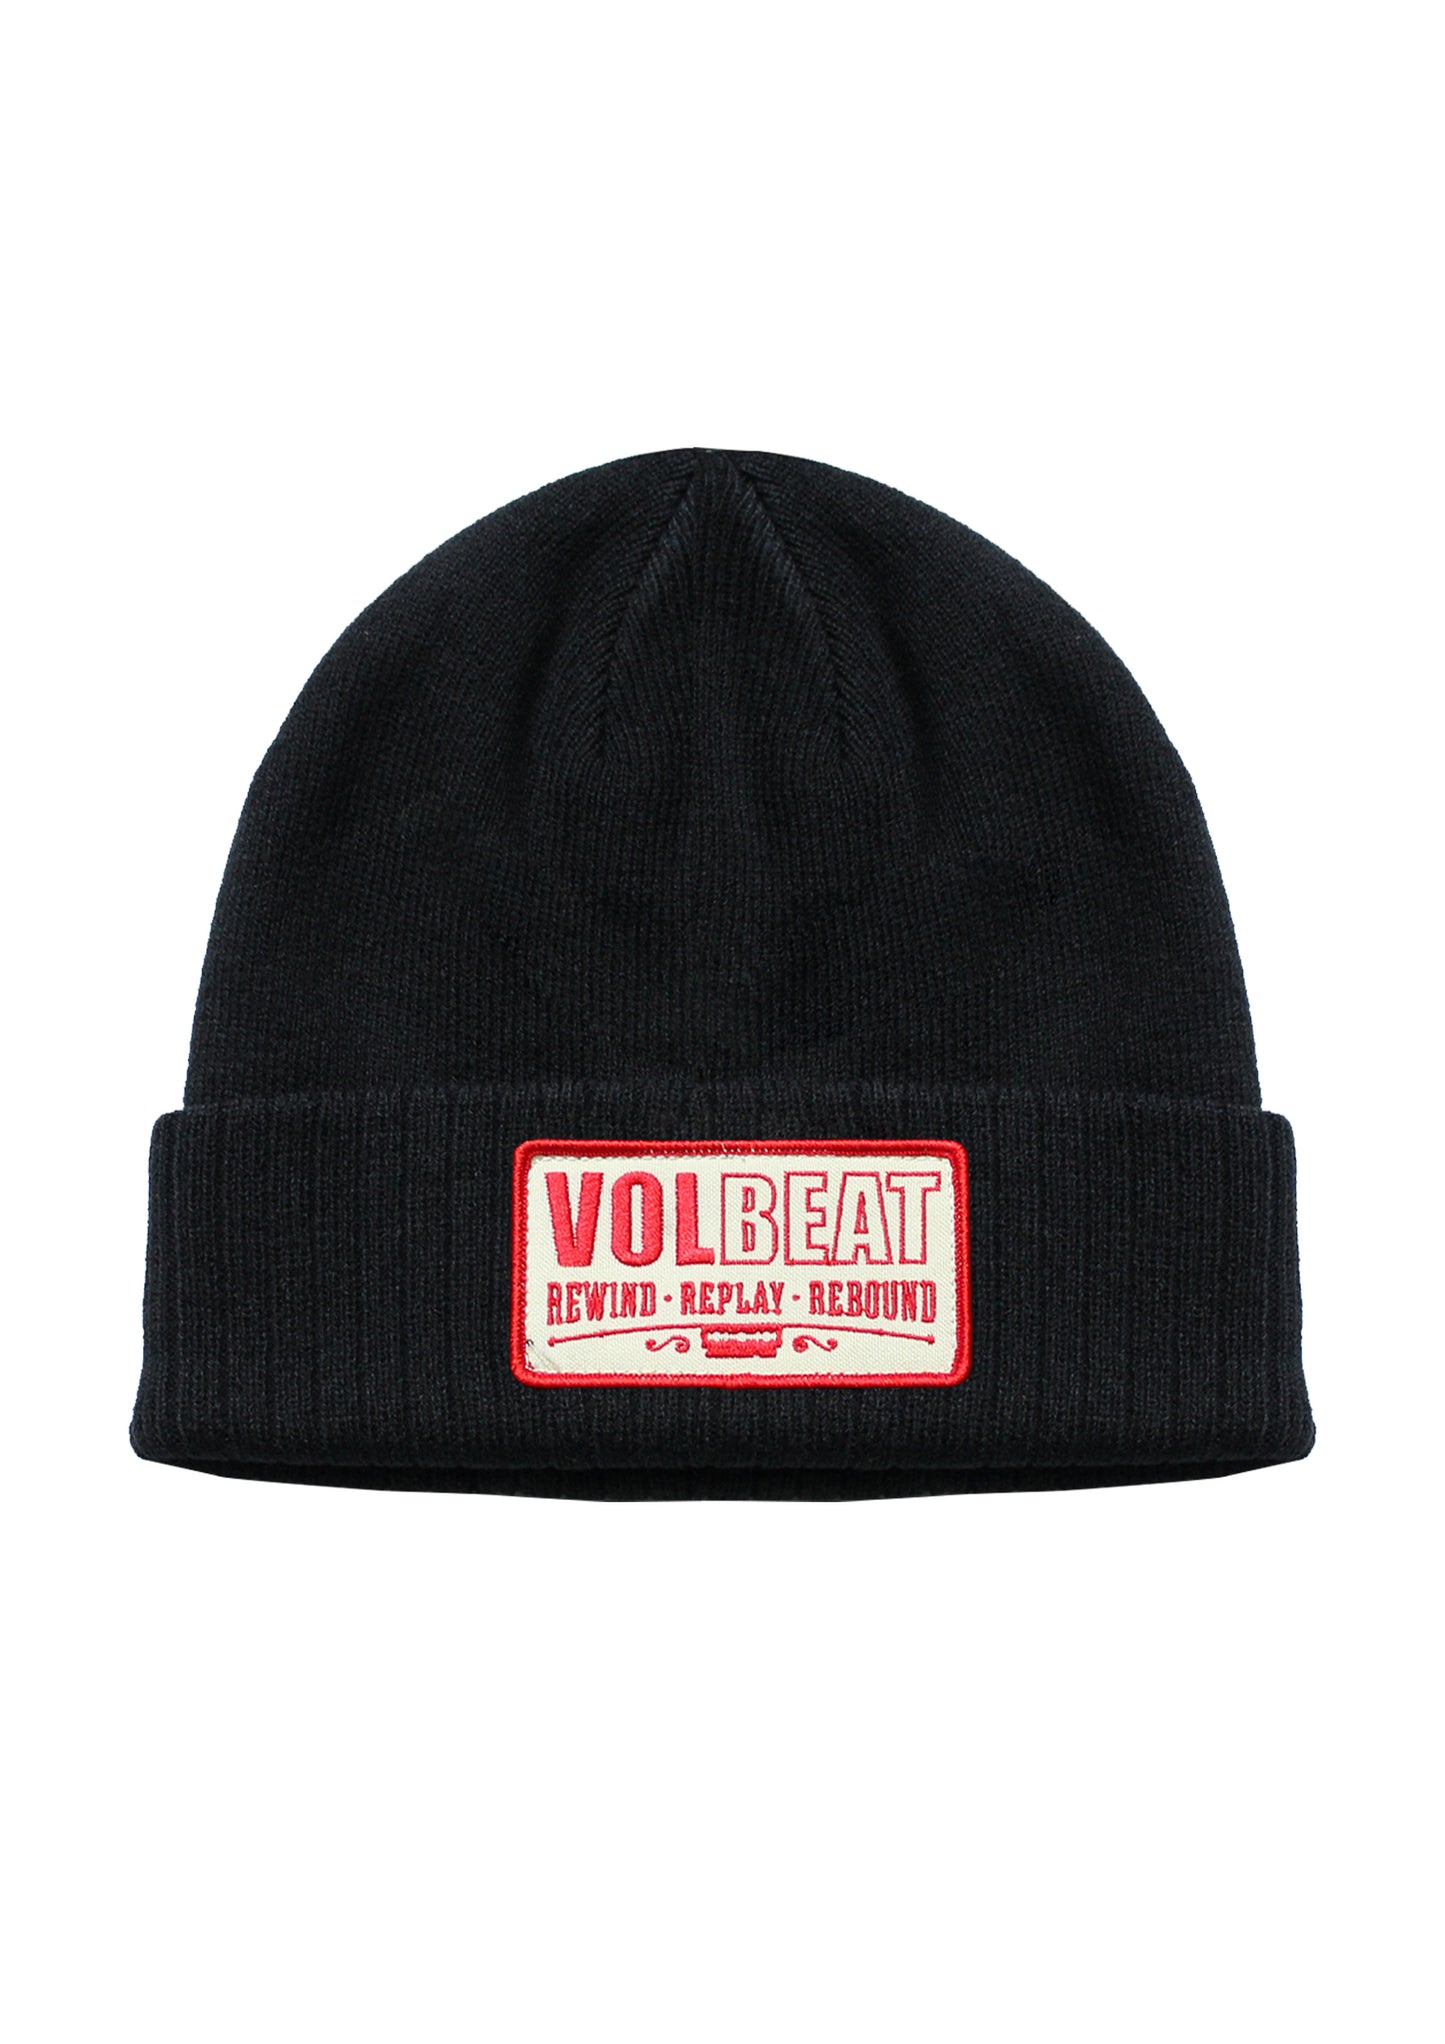 Volbeat Rewind Replay Repeat Black Beanie